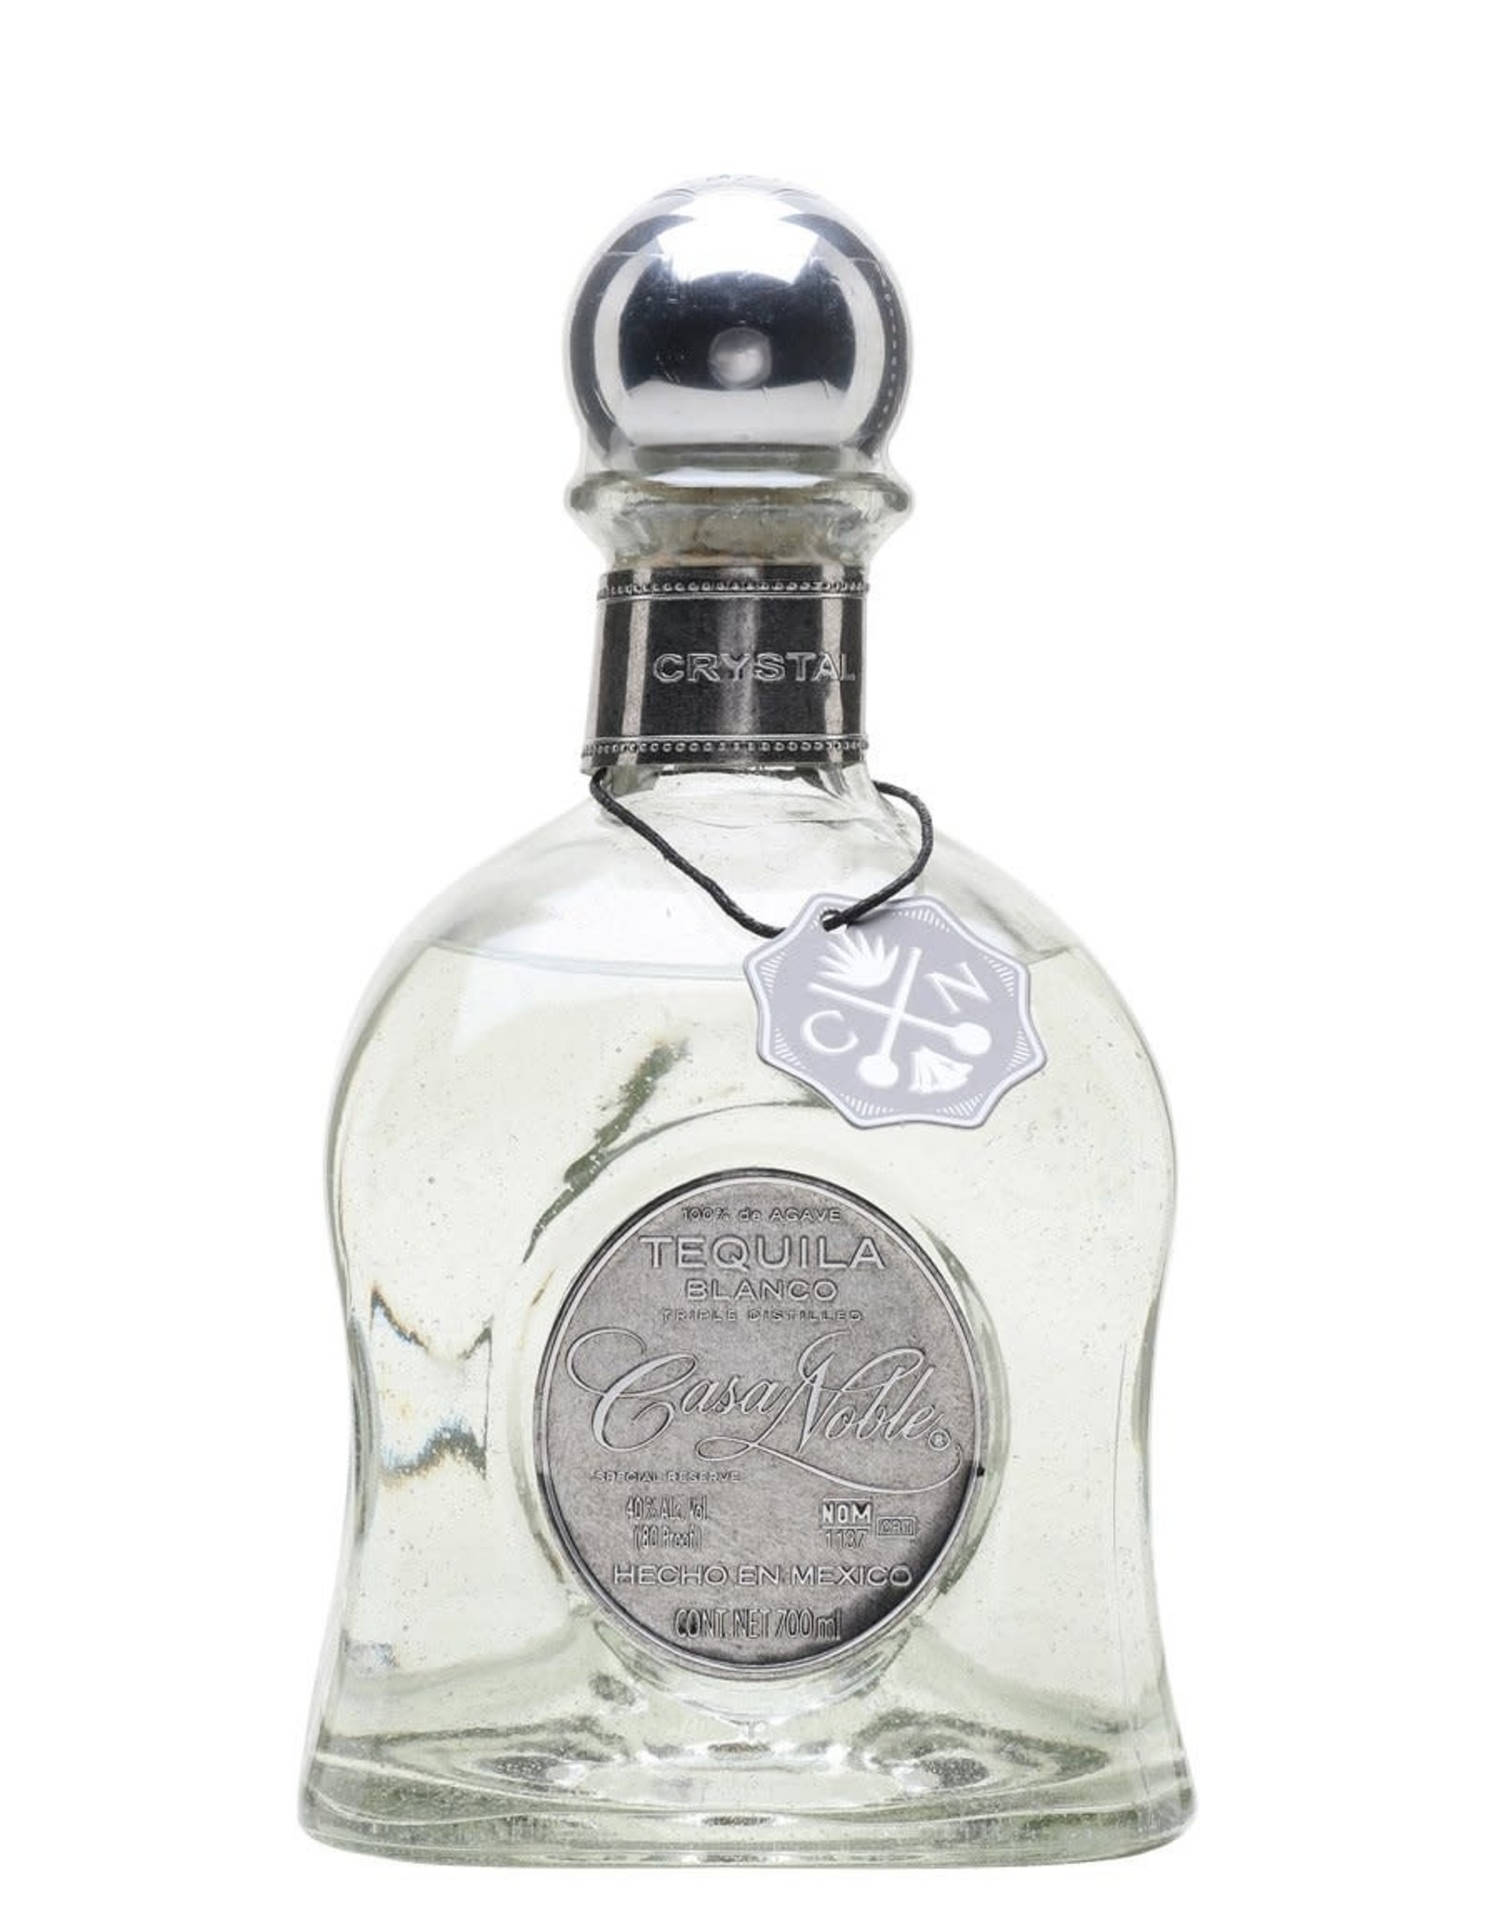 Premium Casa Noble Crystal Blanco Tequila in Vintage Bottle Wallpaper